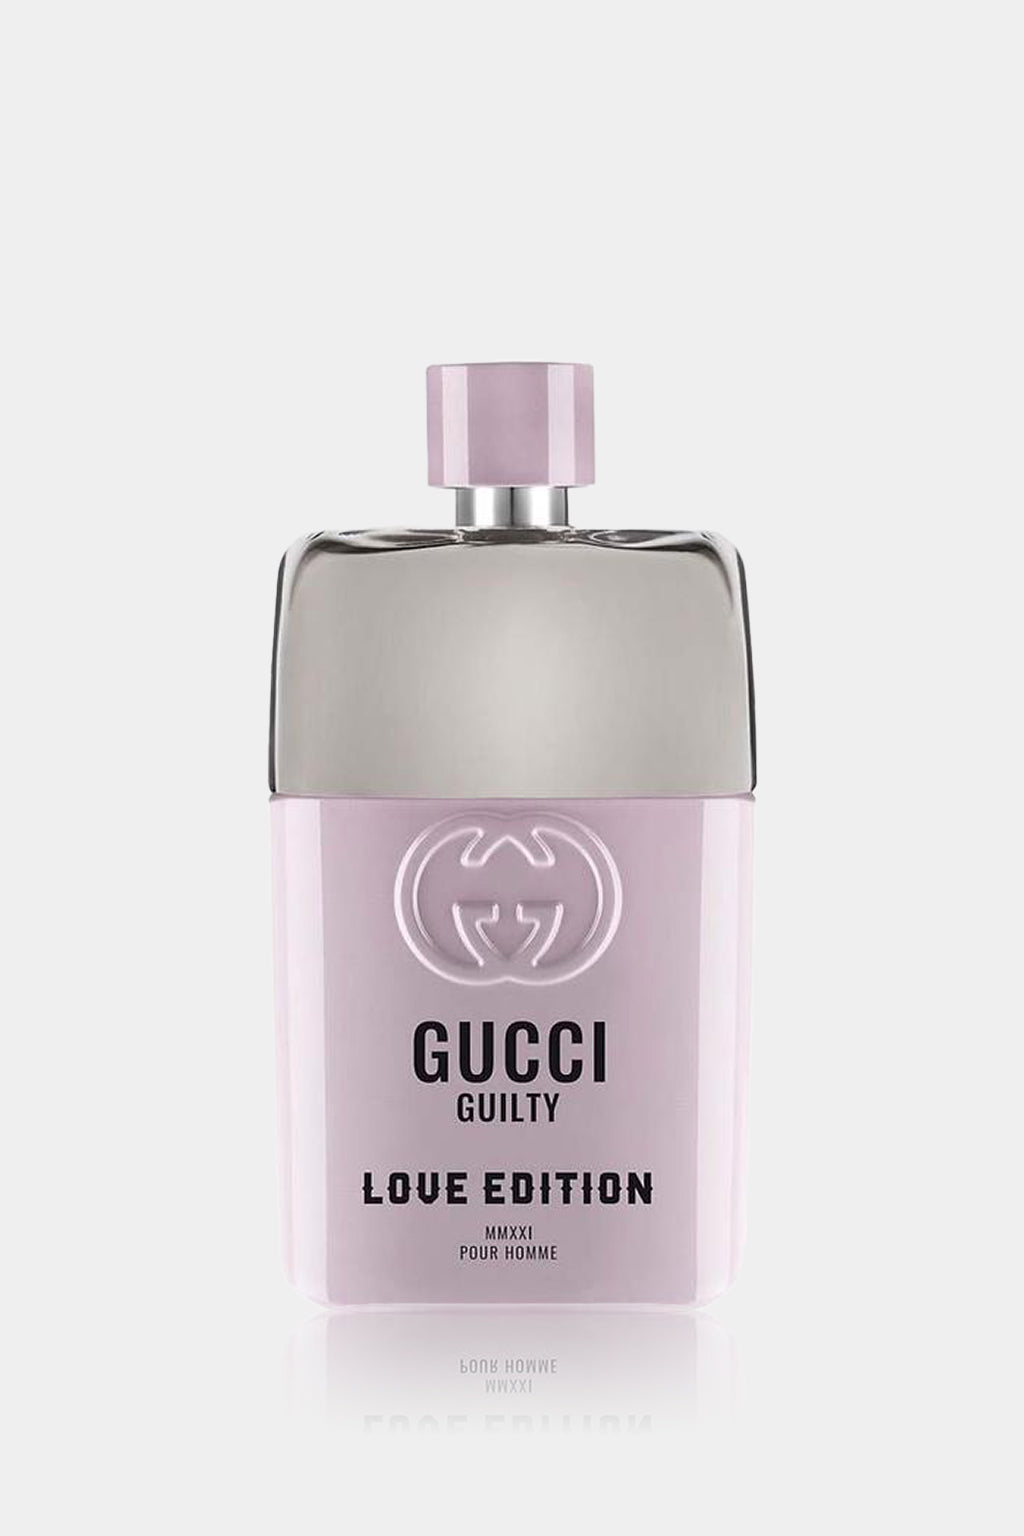 Gucci - Love Edition MMXXI Eau de Toilette